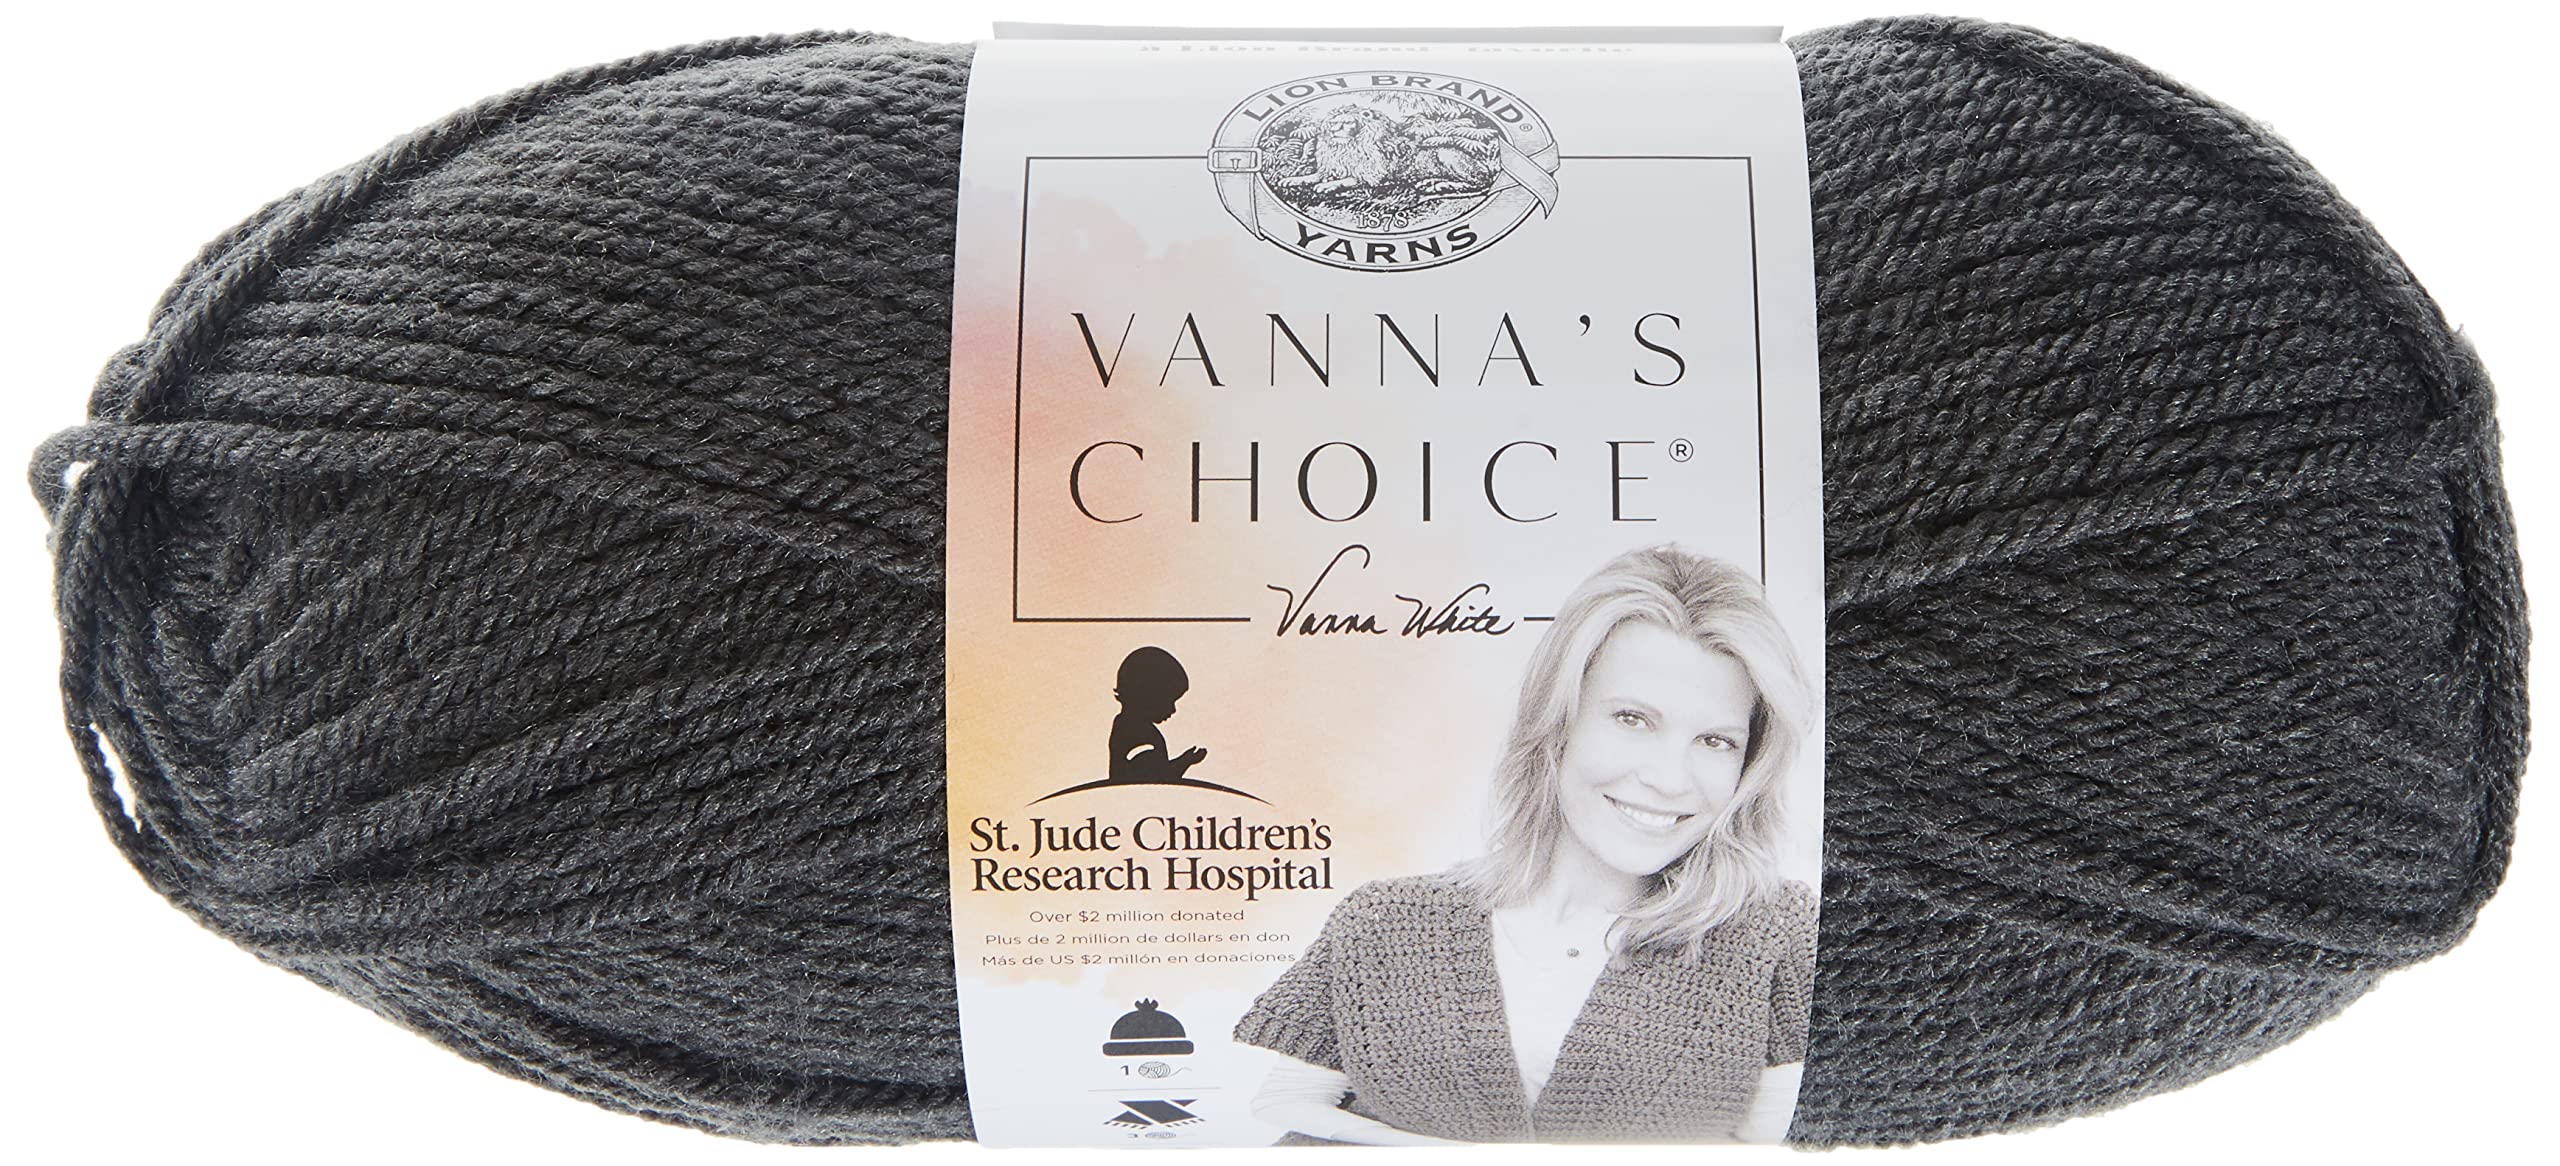 lion brand vannas choice yarn